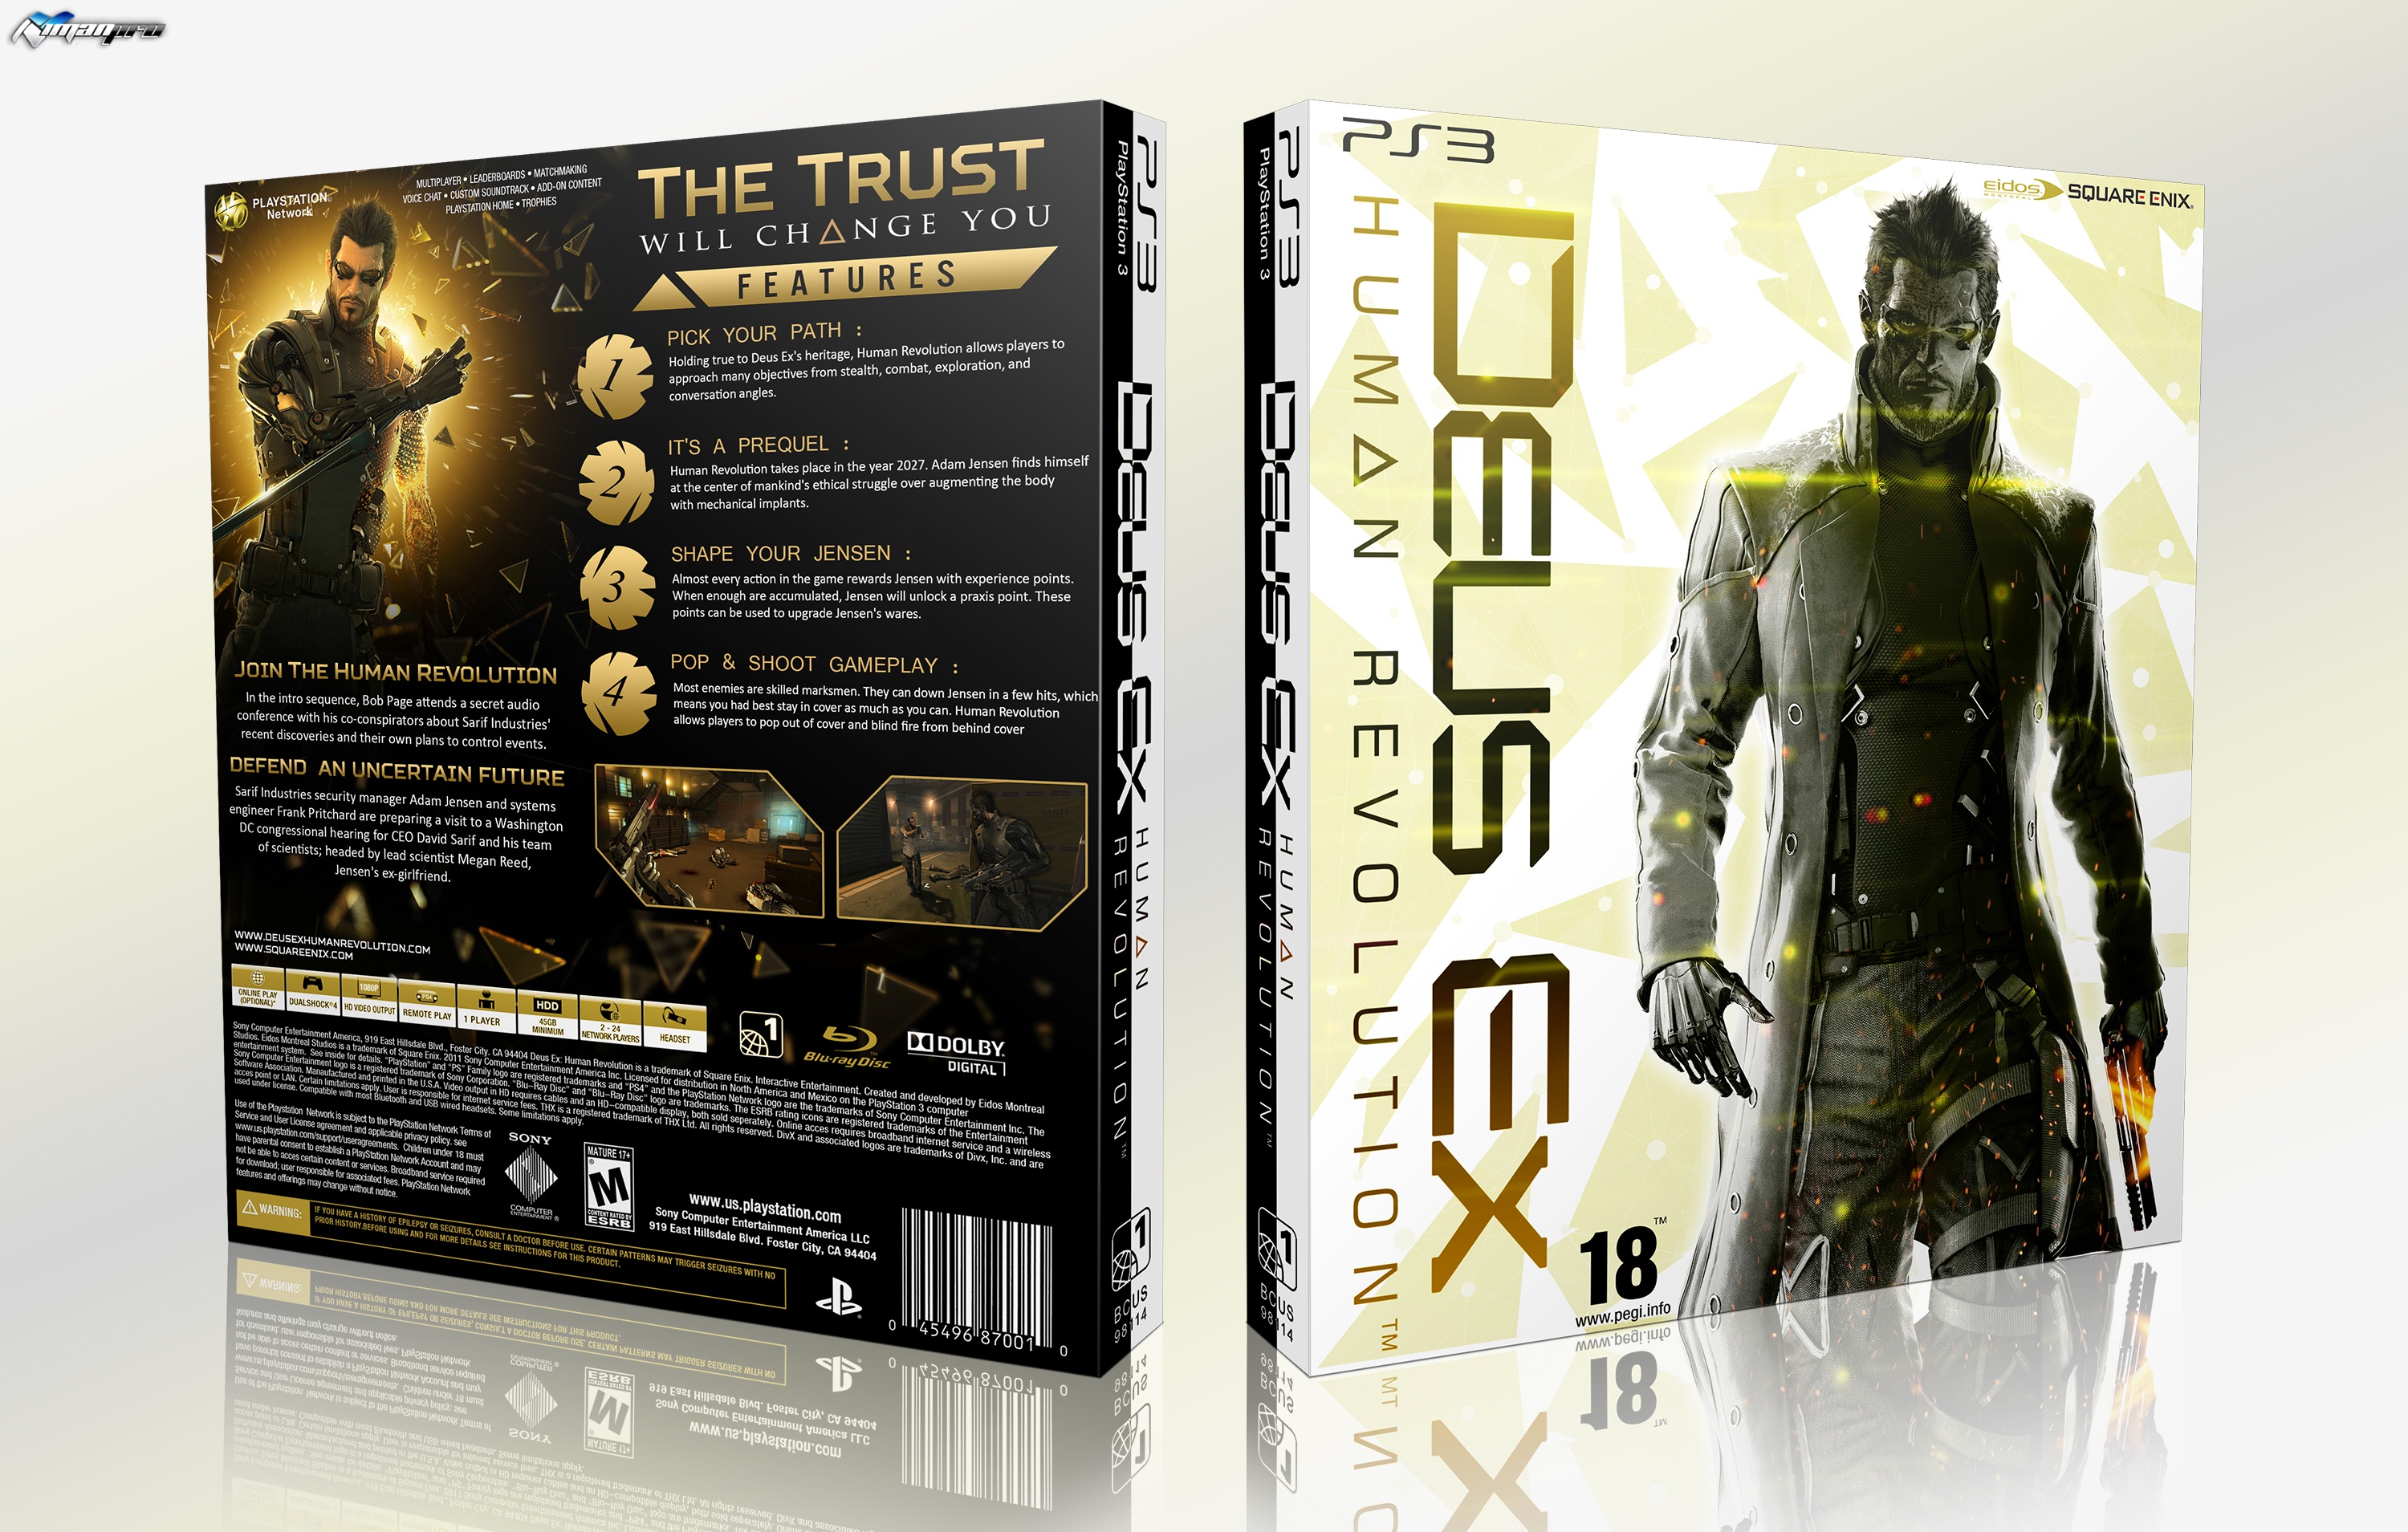 Deus Ex : Human Revolution box cover